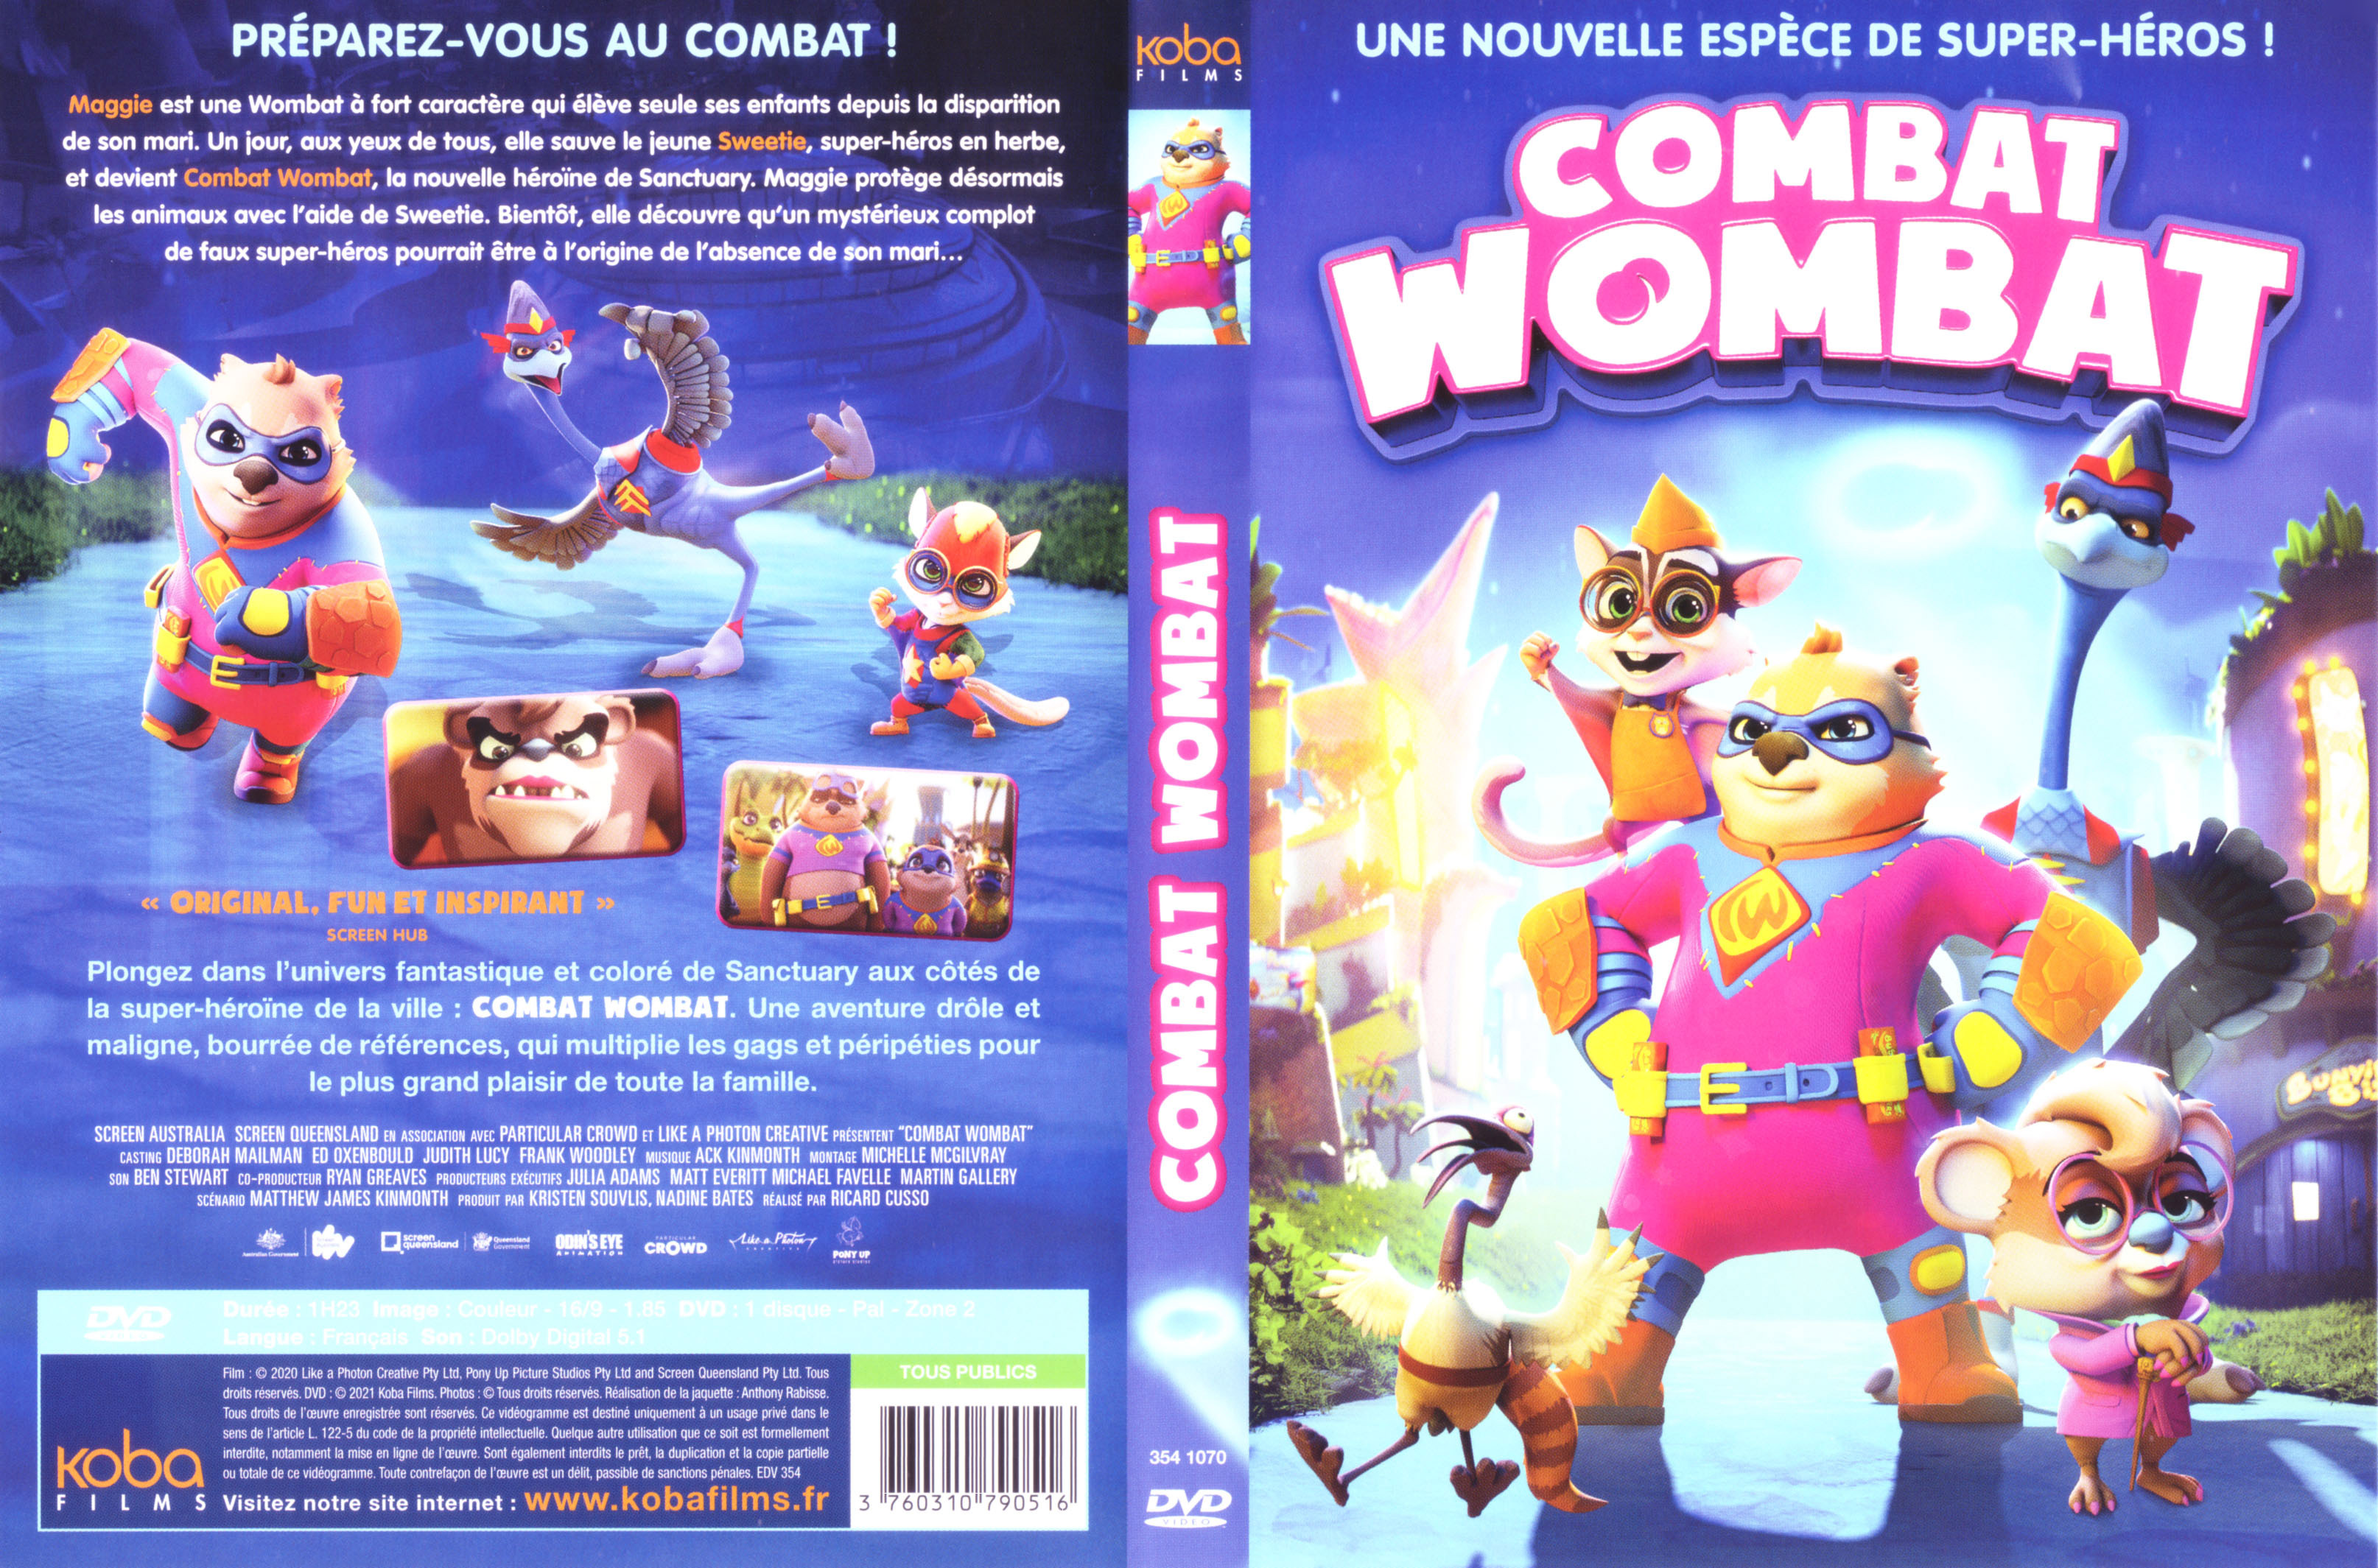 Jaquette DVD Combat wombat